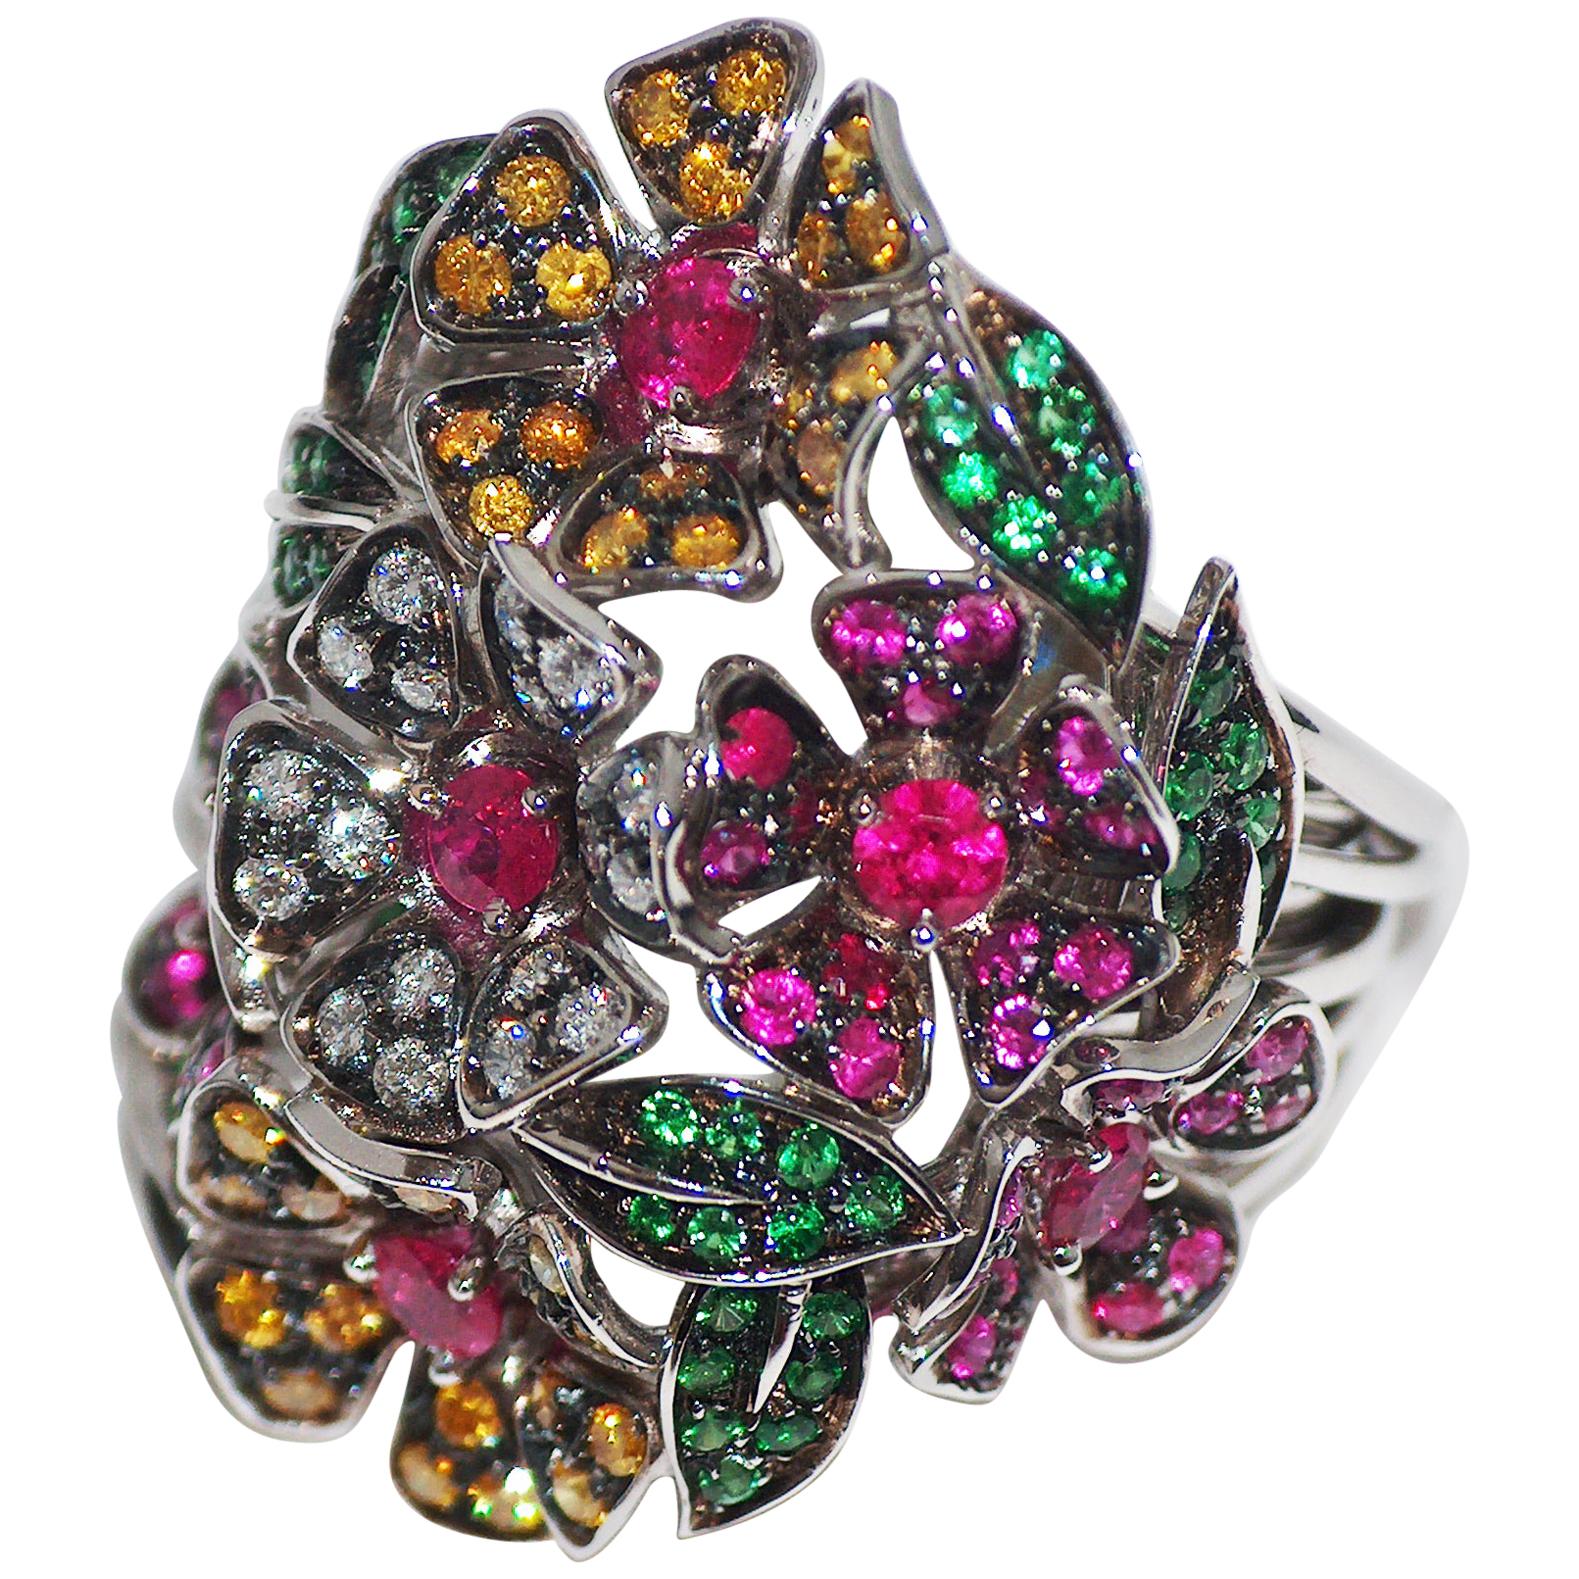 Paolo Piovan Diamonds, Sapphires, Rubies, Tsavorites 18 Karat White Gold Ring For Sale